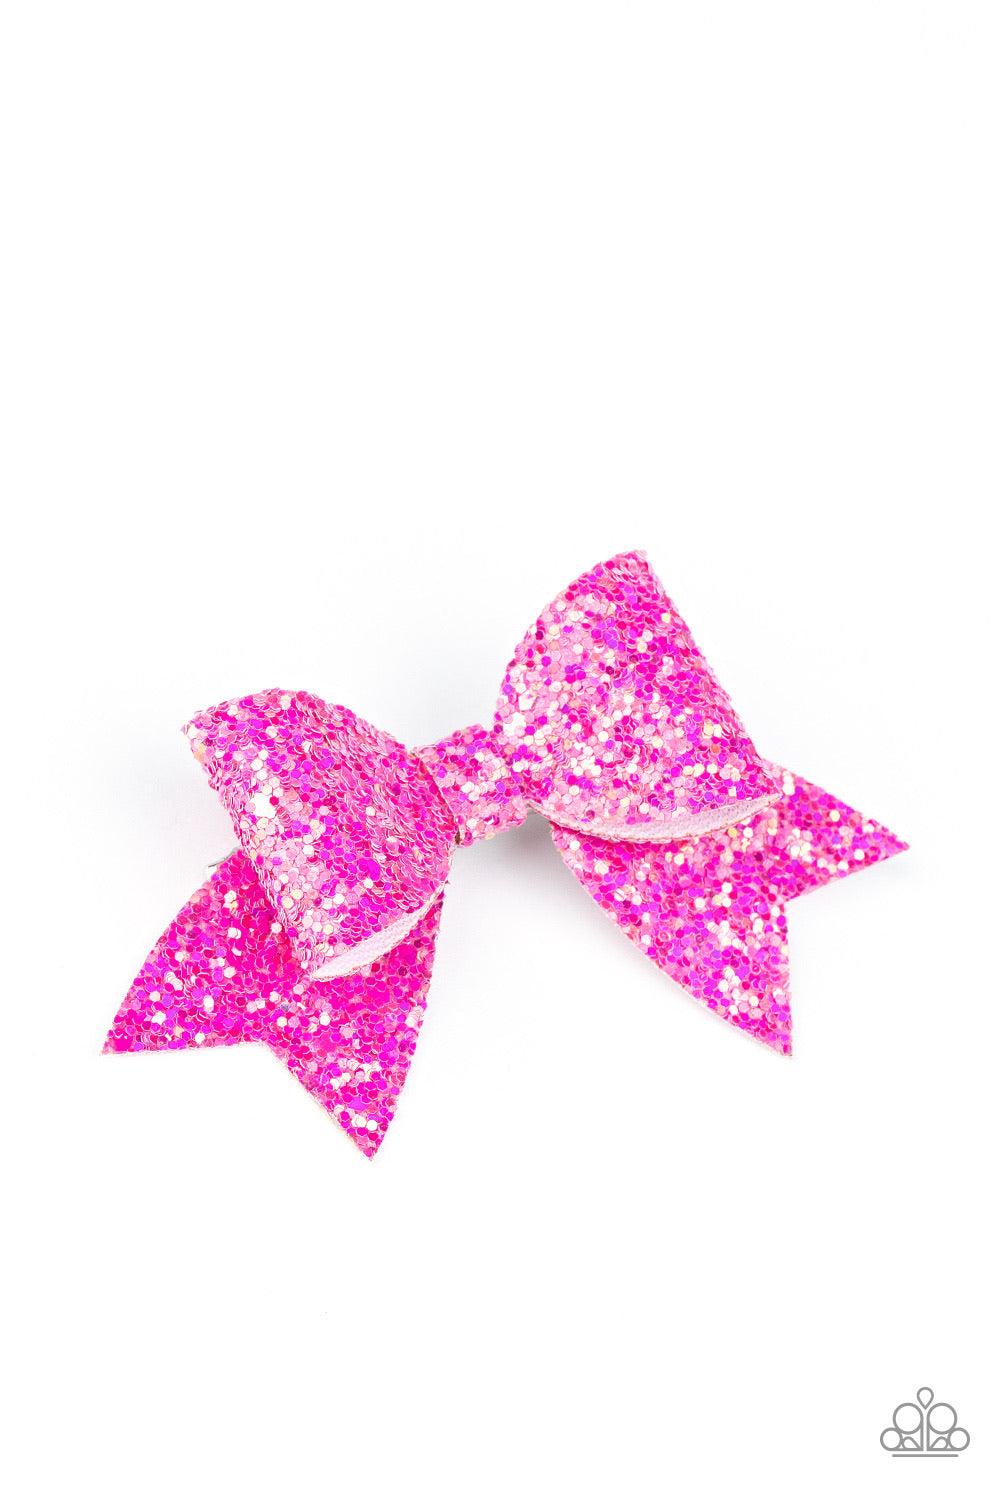 Confetti Princess ~Pink - Beautifully Blinged